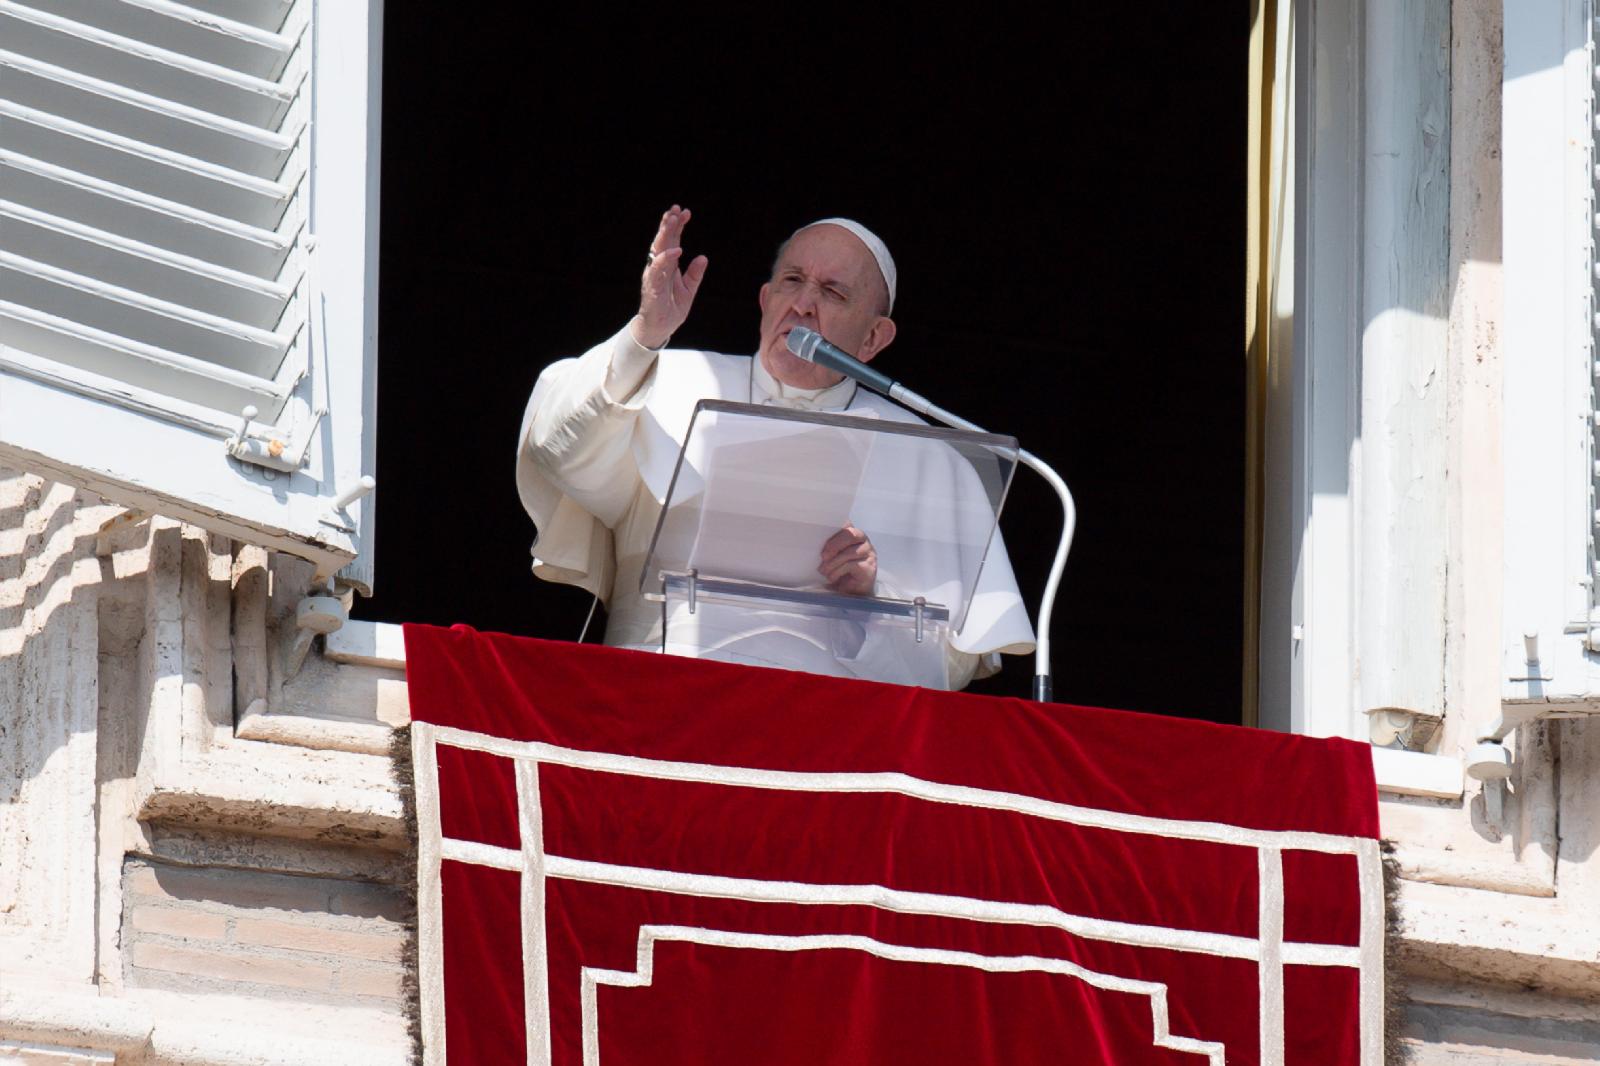 Fight temptation with faith, says Pope